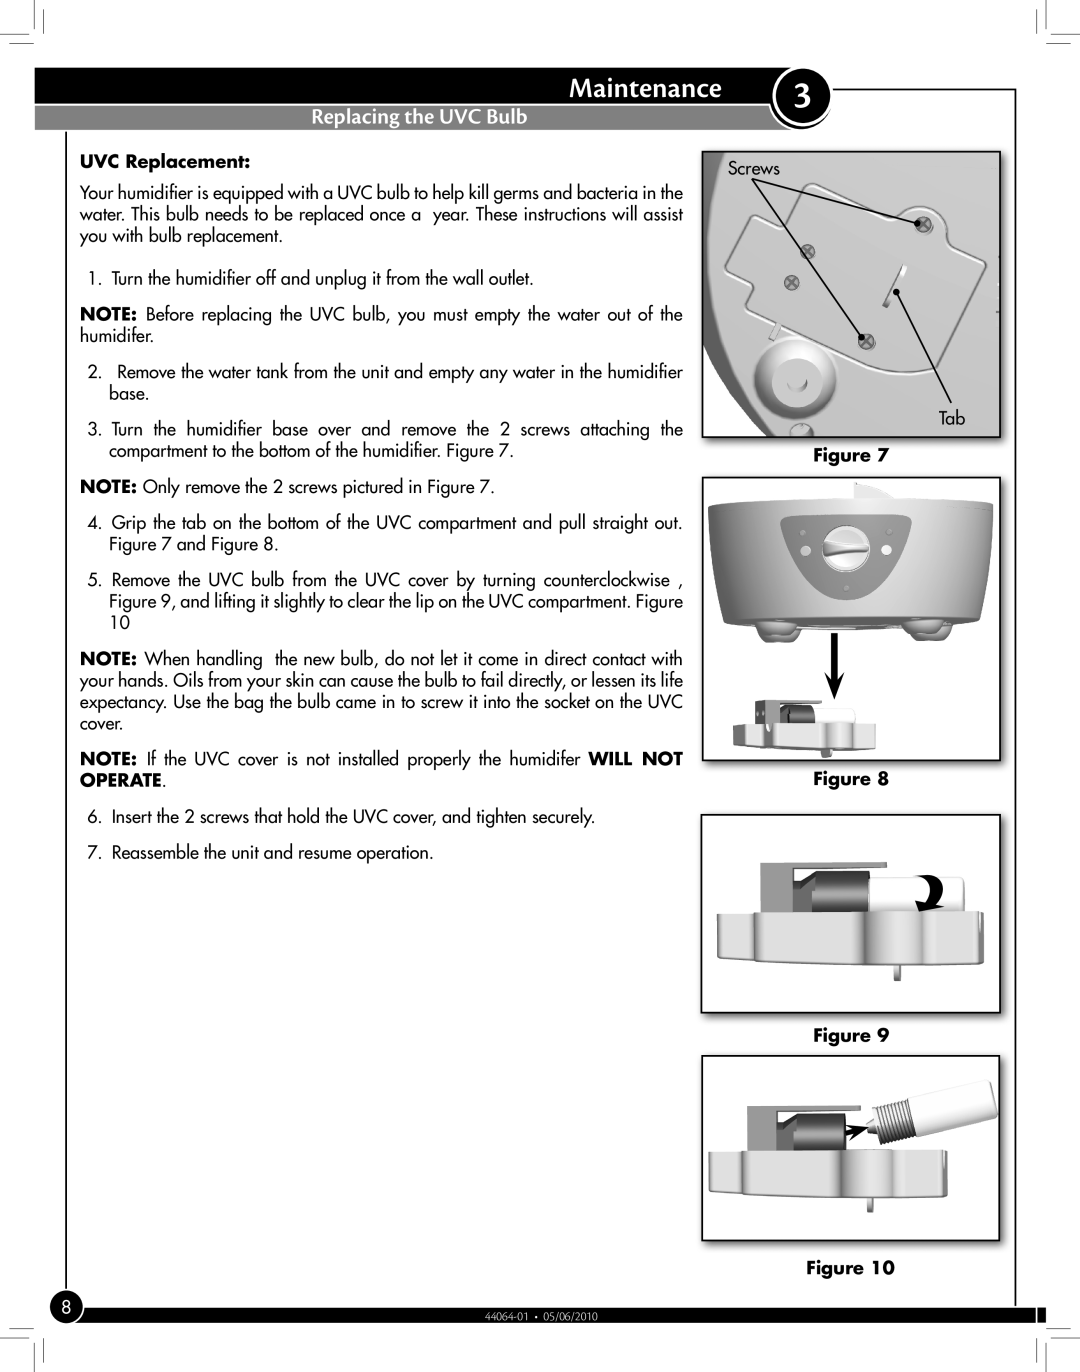 Hunter Fan 31206, 31207 manual Maintenance, UVC Replacement, Replacing the UVC Bulb, Figure Figure 